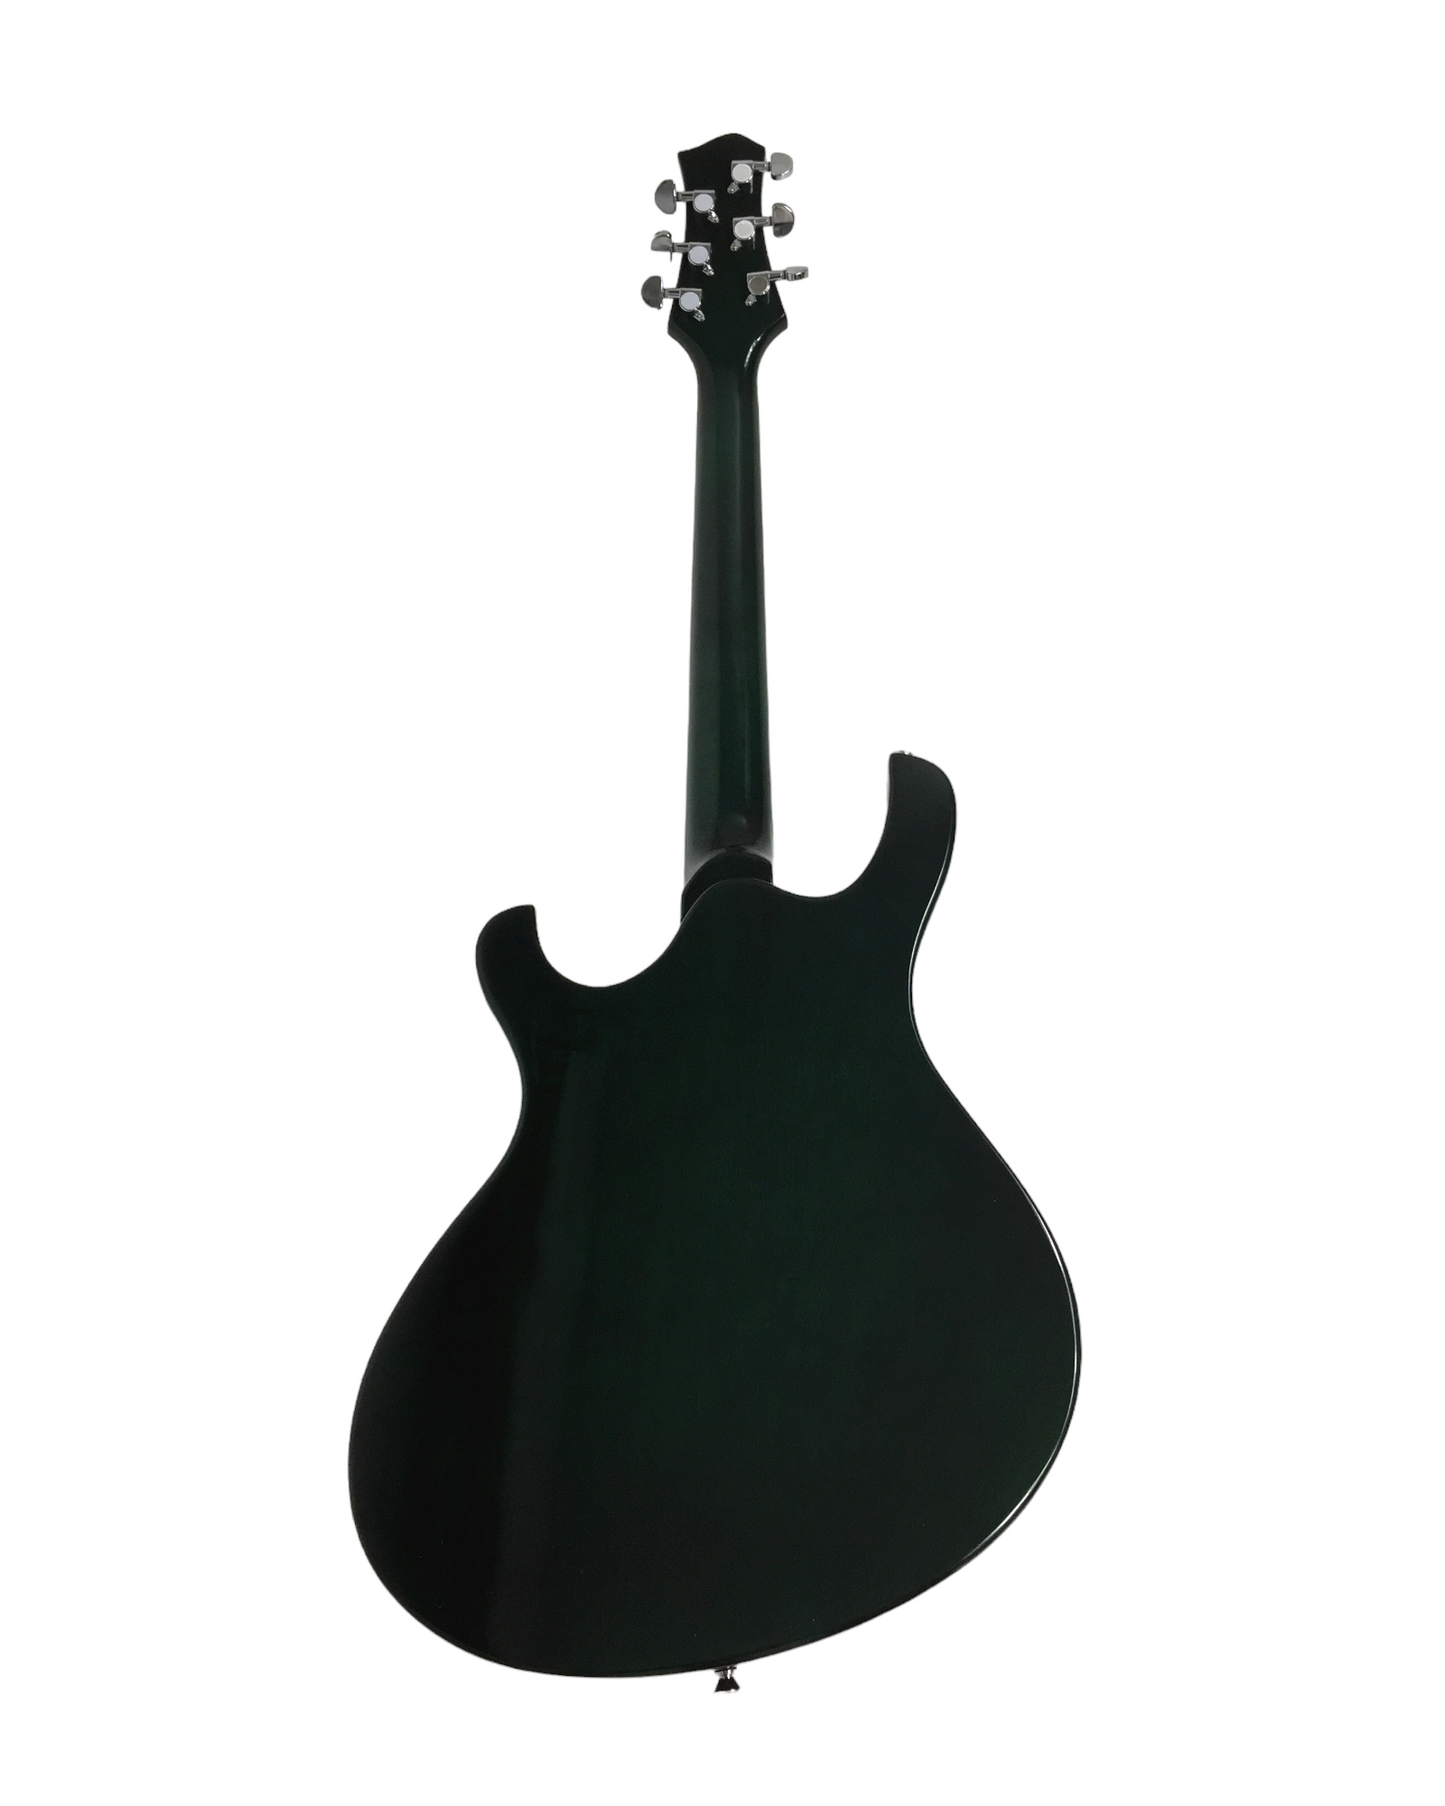 Haze Semi-Hollow Double-Cut Offset HES Electric Guitar - Green HD348TGN